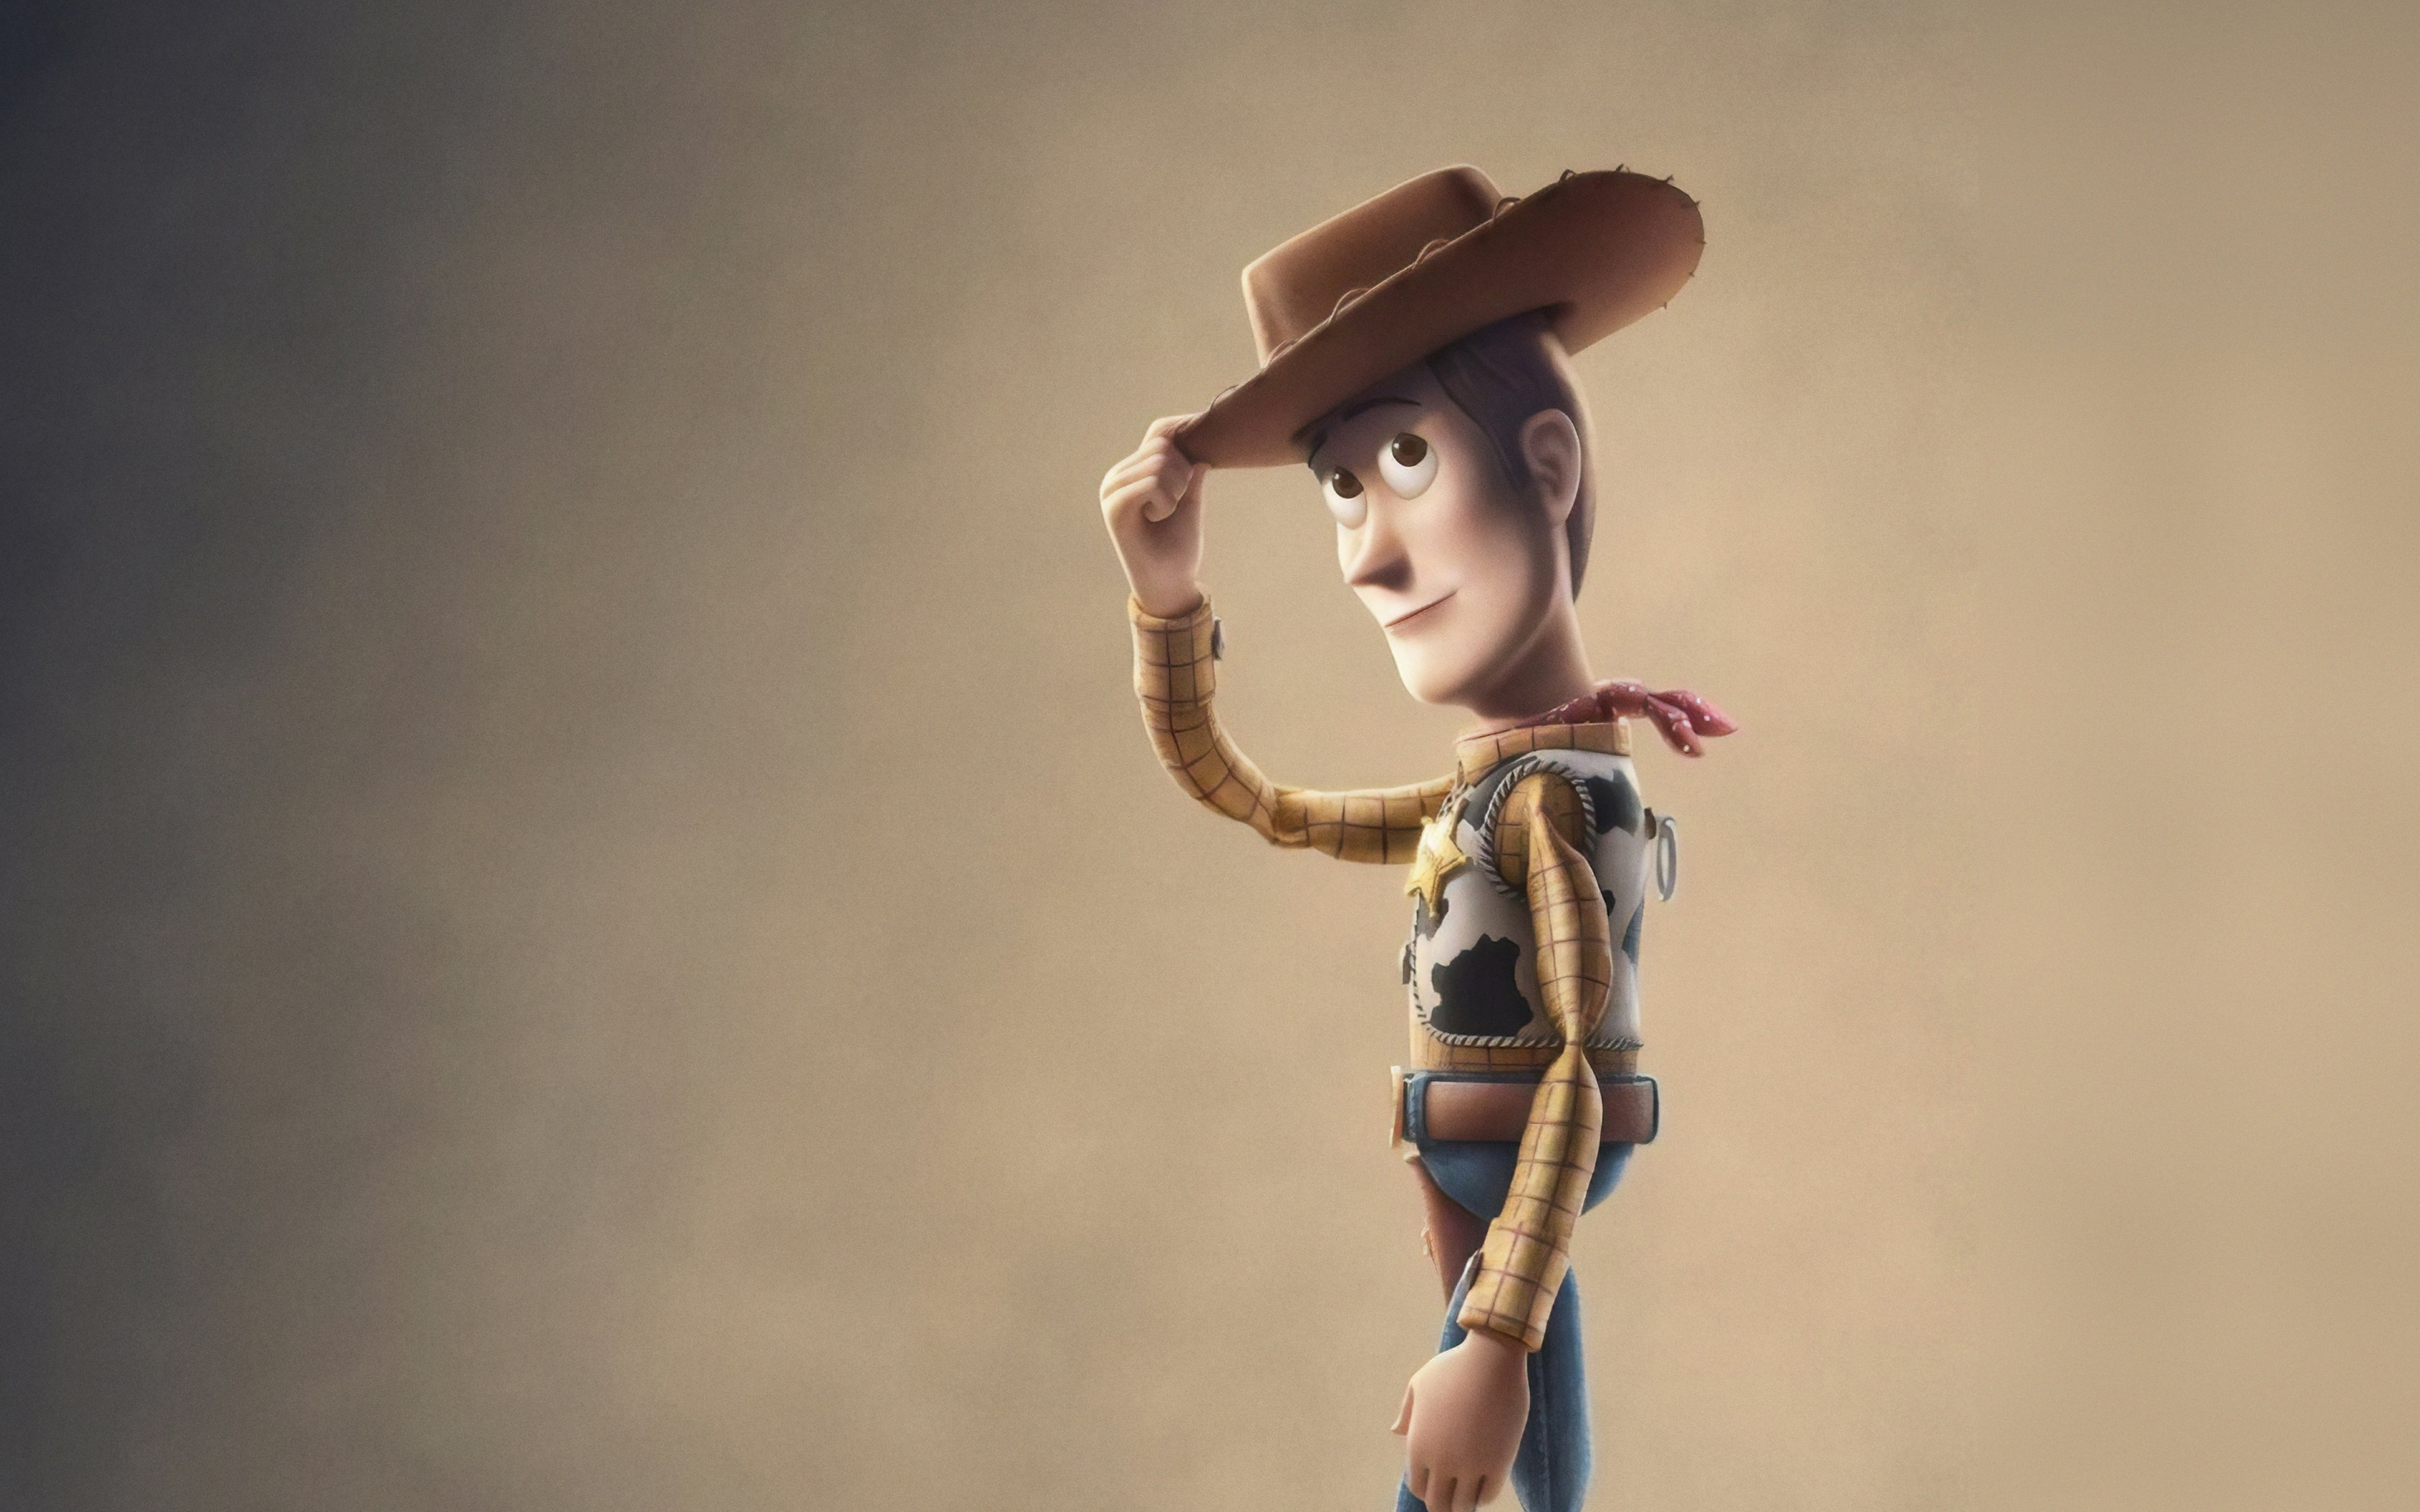 Toy story 4, Woody, animation movie, pixar, 2880x1800 wallpaper